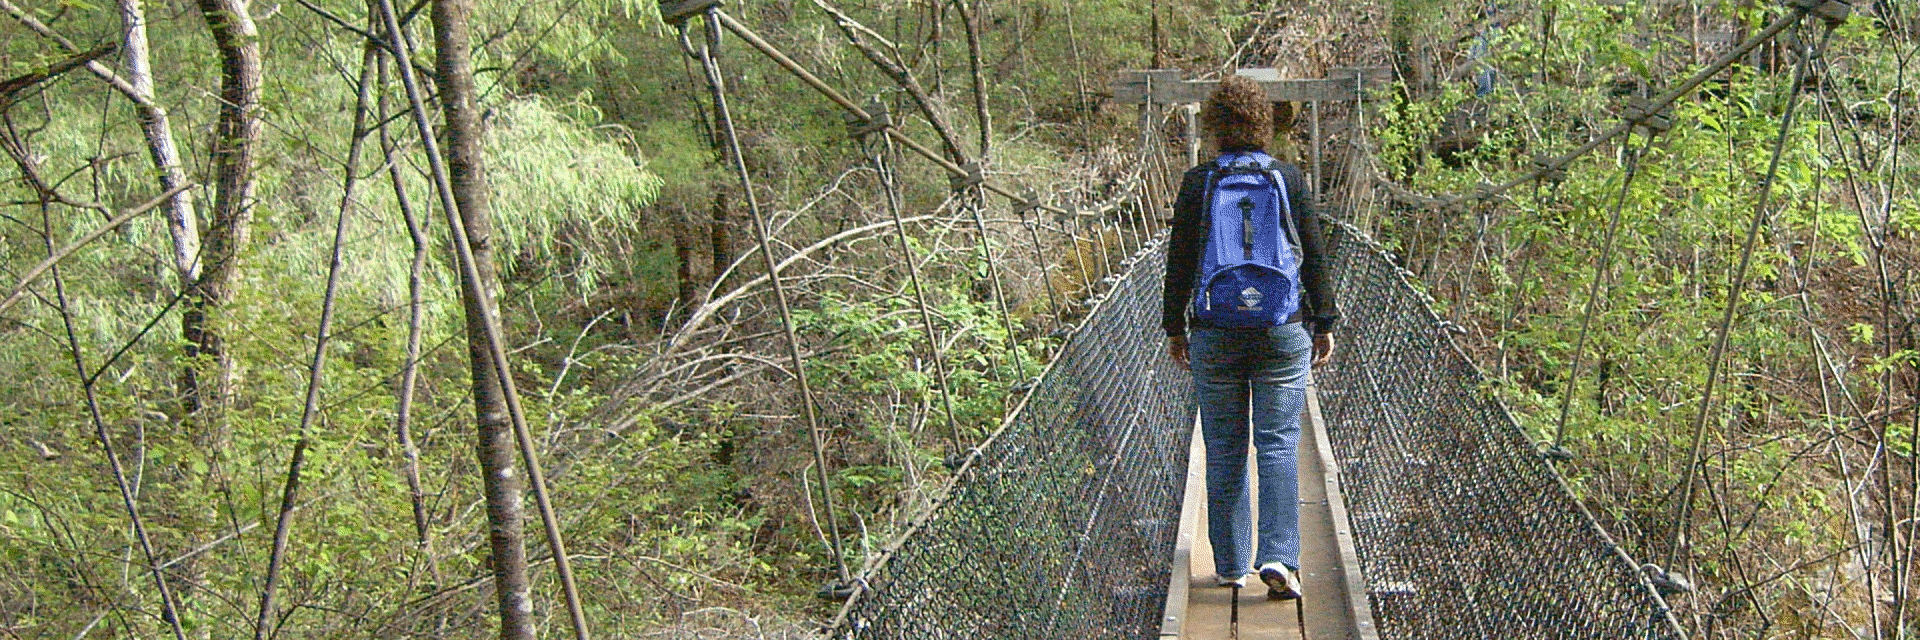 walking across swingbridge with waterproof himal backpack